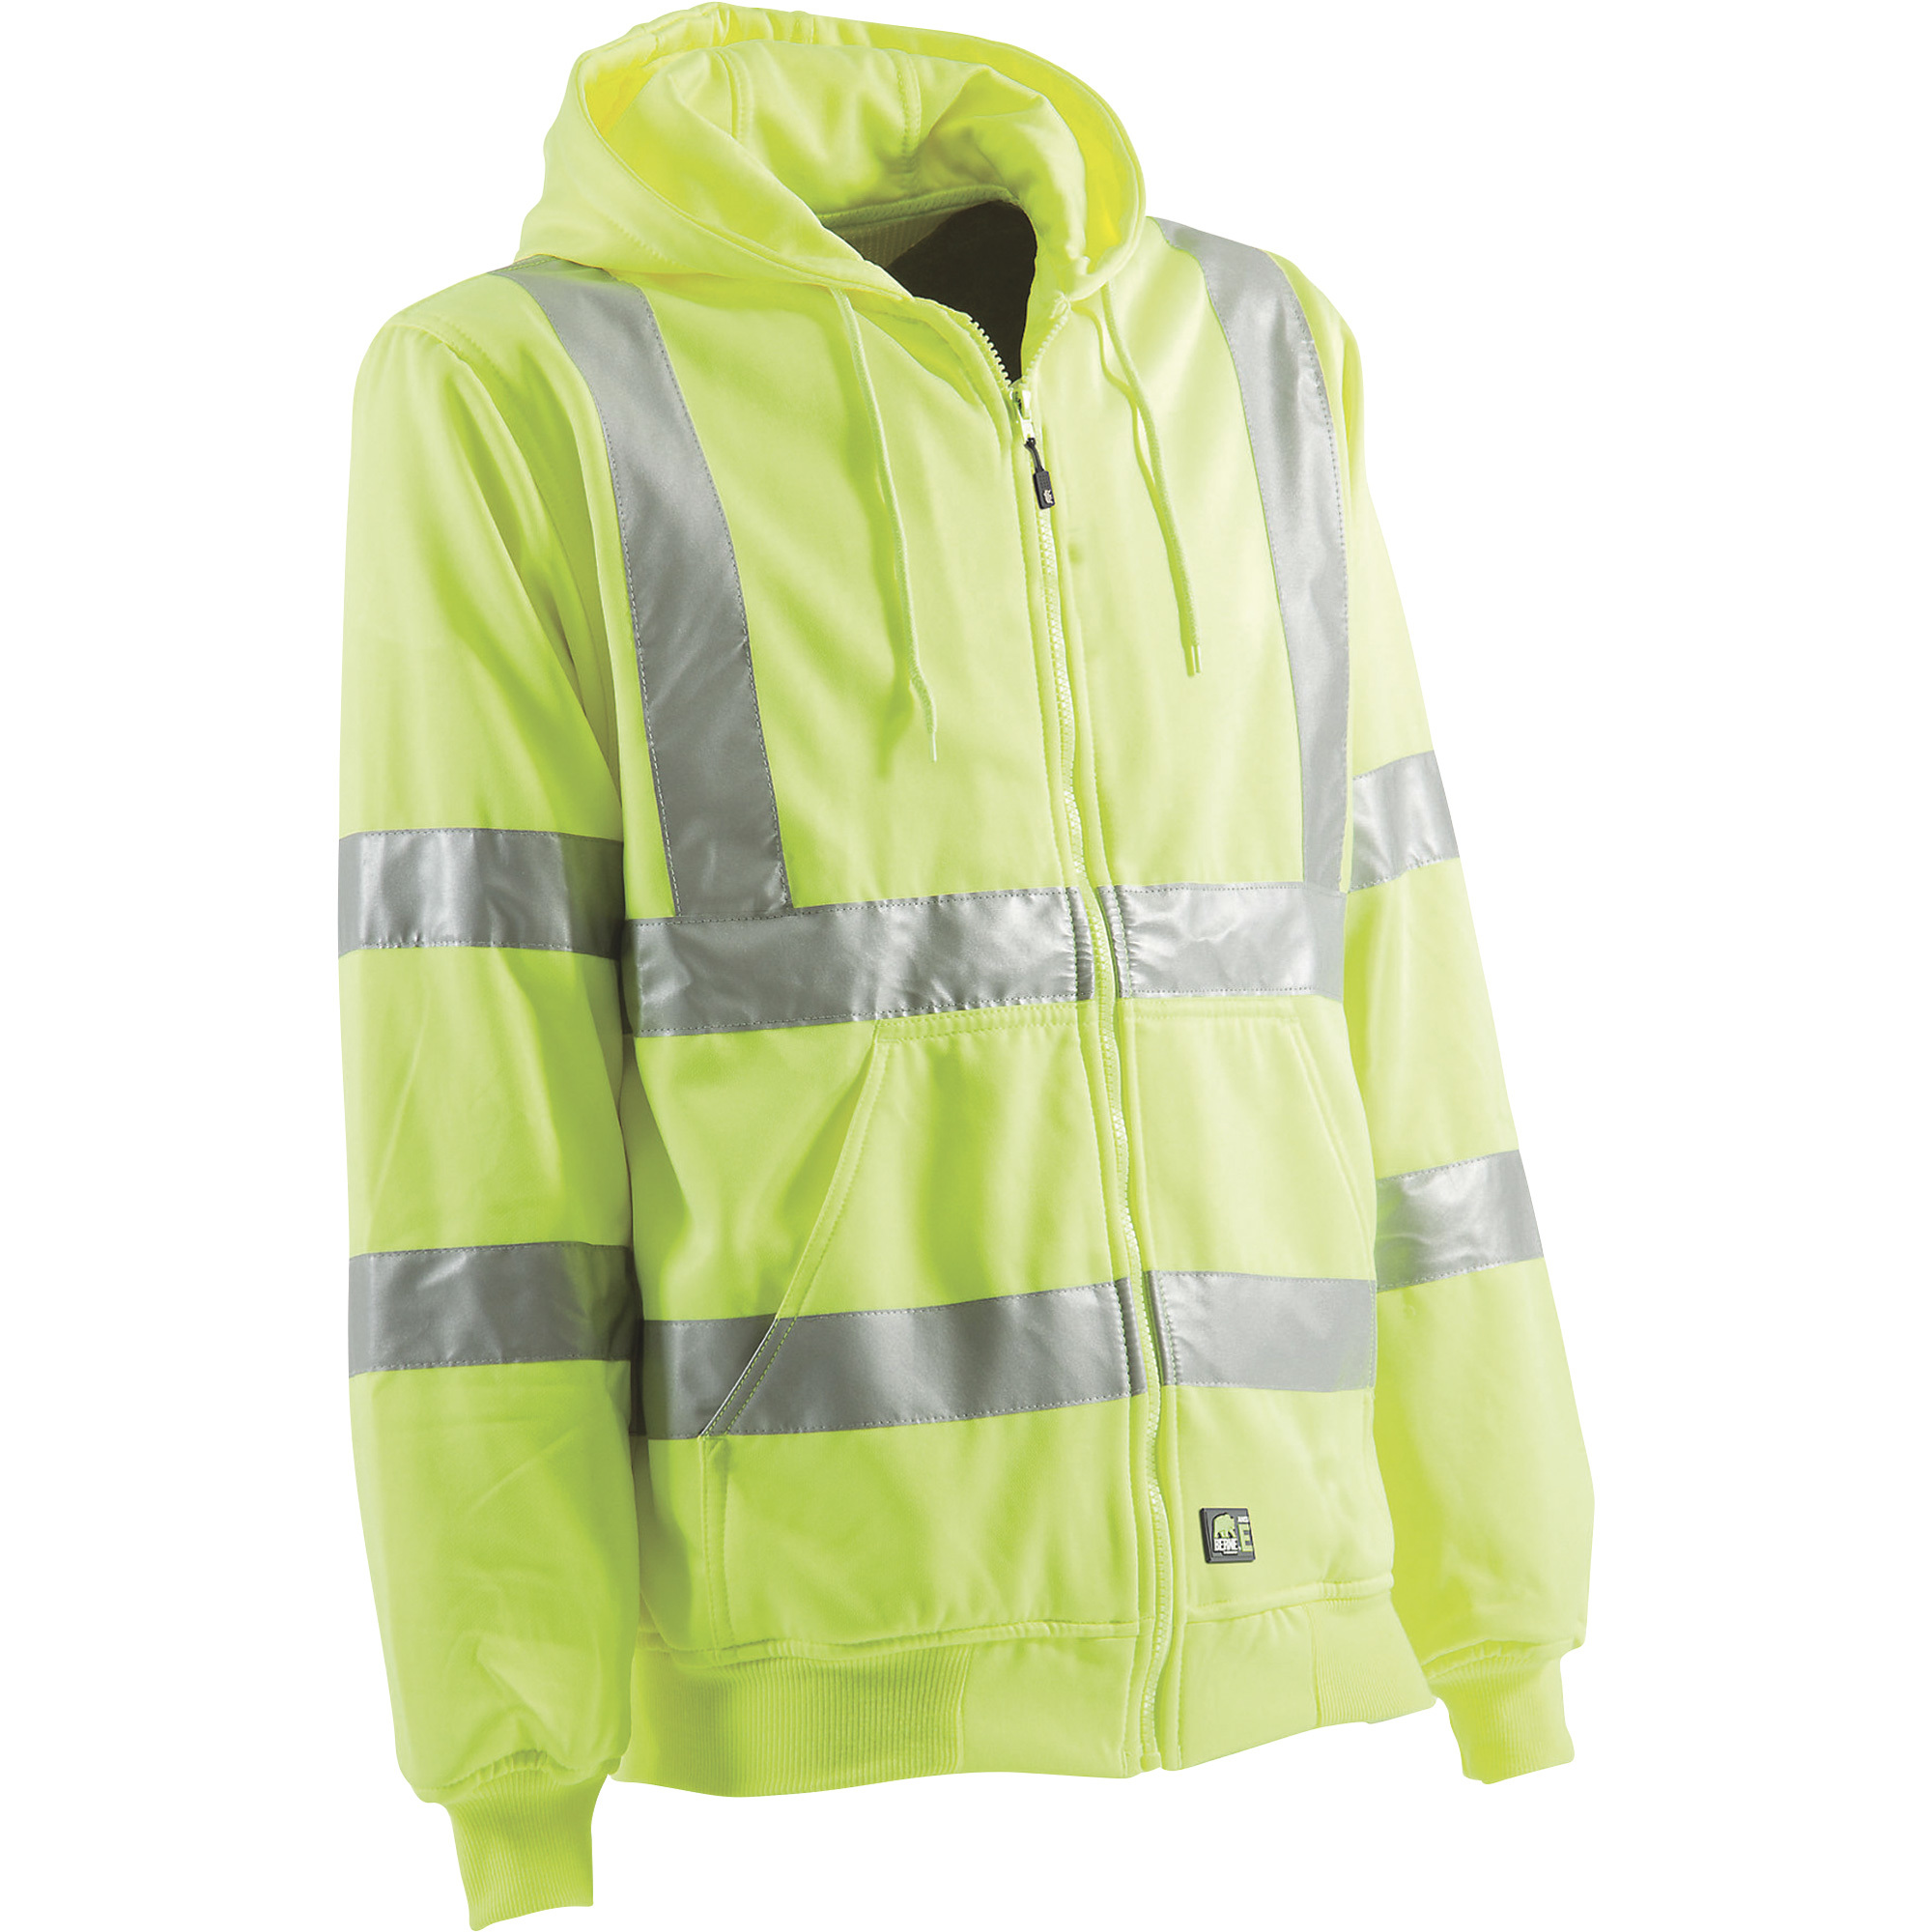 Berne Men's Class 3 High Visibility Hooded Sweatshirt â Lime, Large/Tall, Model HVF021YWT440